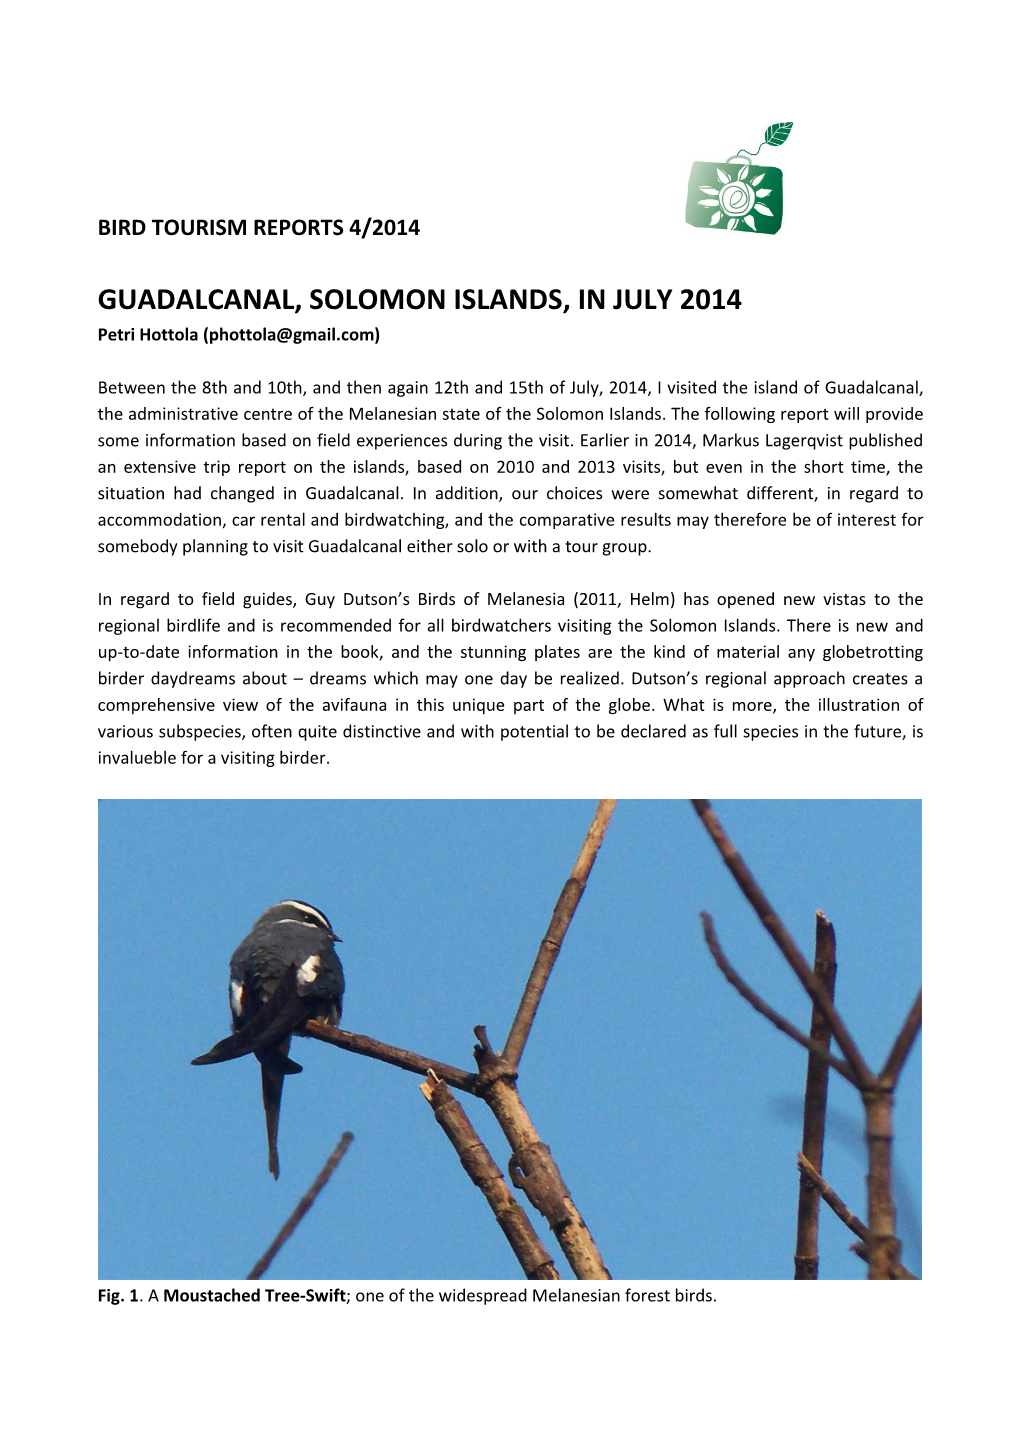 GUADALCANAL, SOLOMON ISLANDS, in JULY 2014 Petri Hottola (Phottola@Gmail.Com)